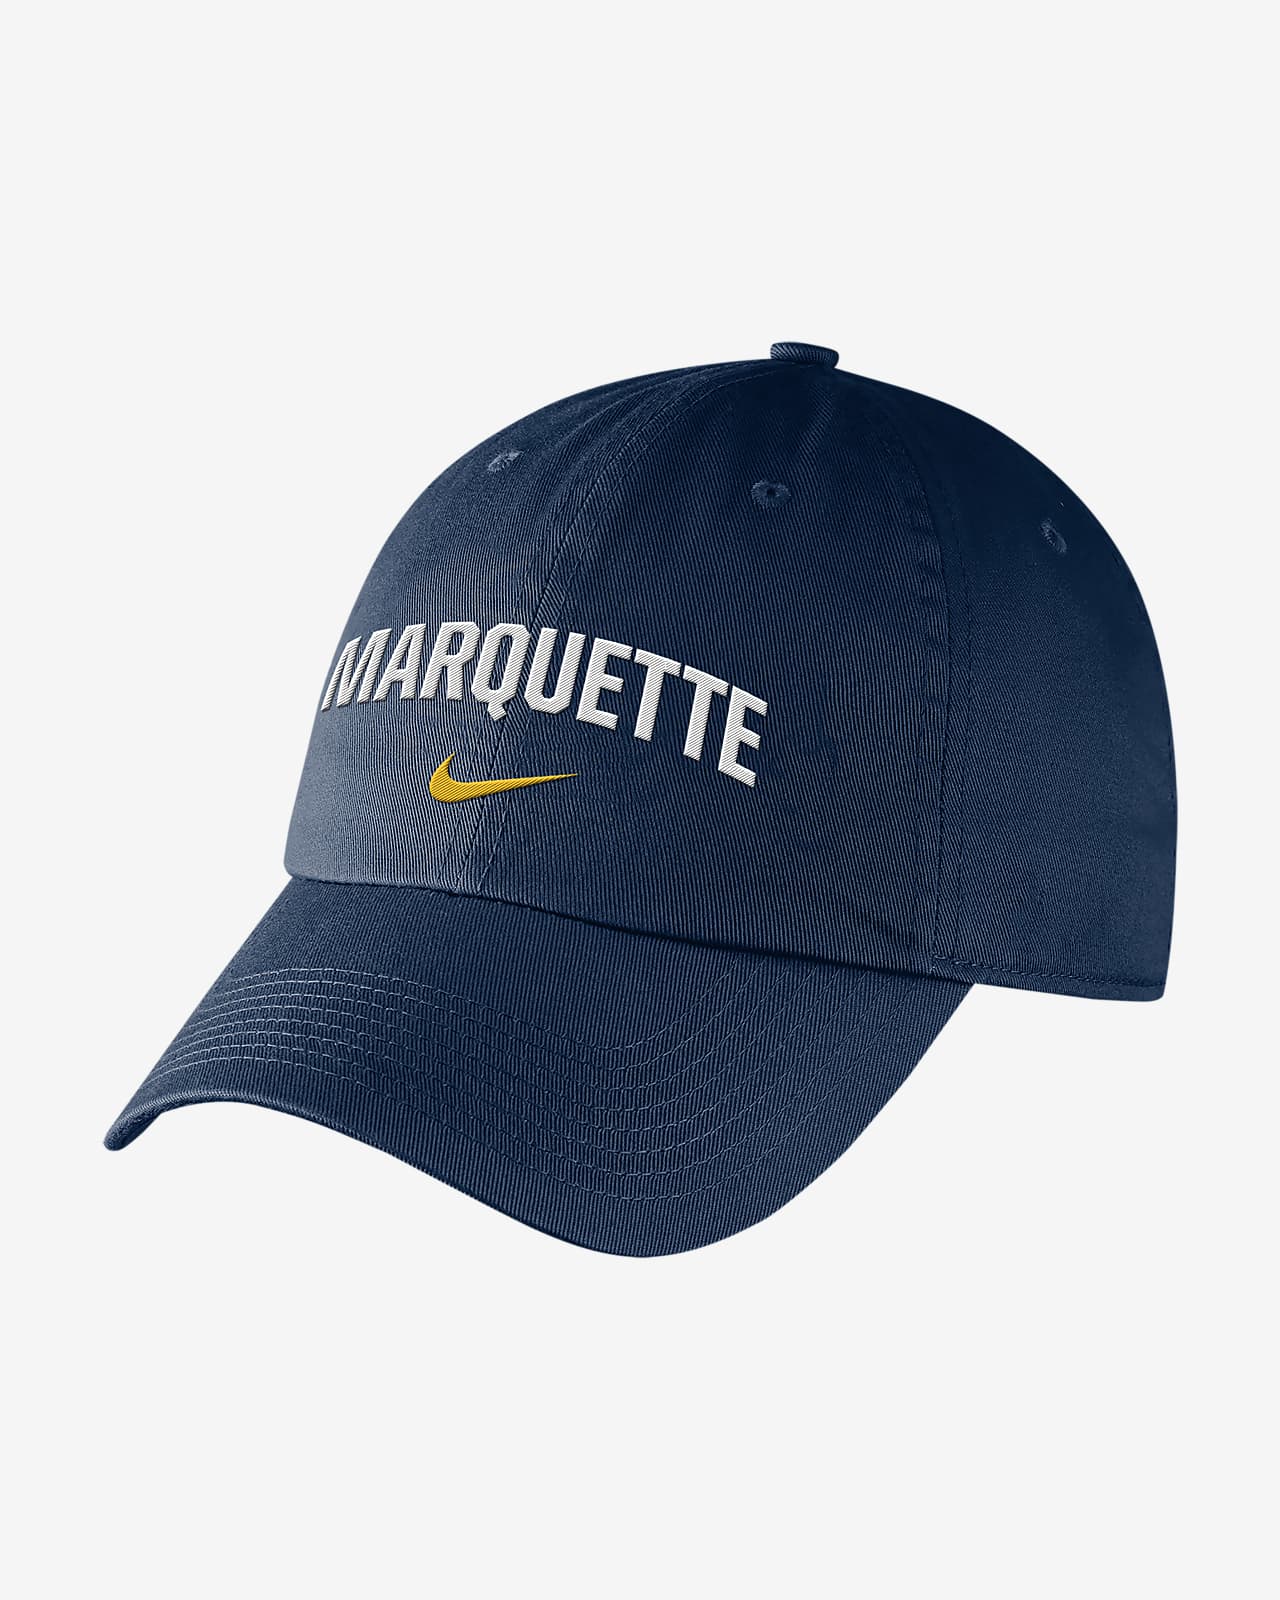 Nike College (Marquette) Hat